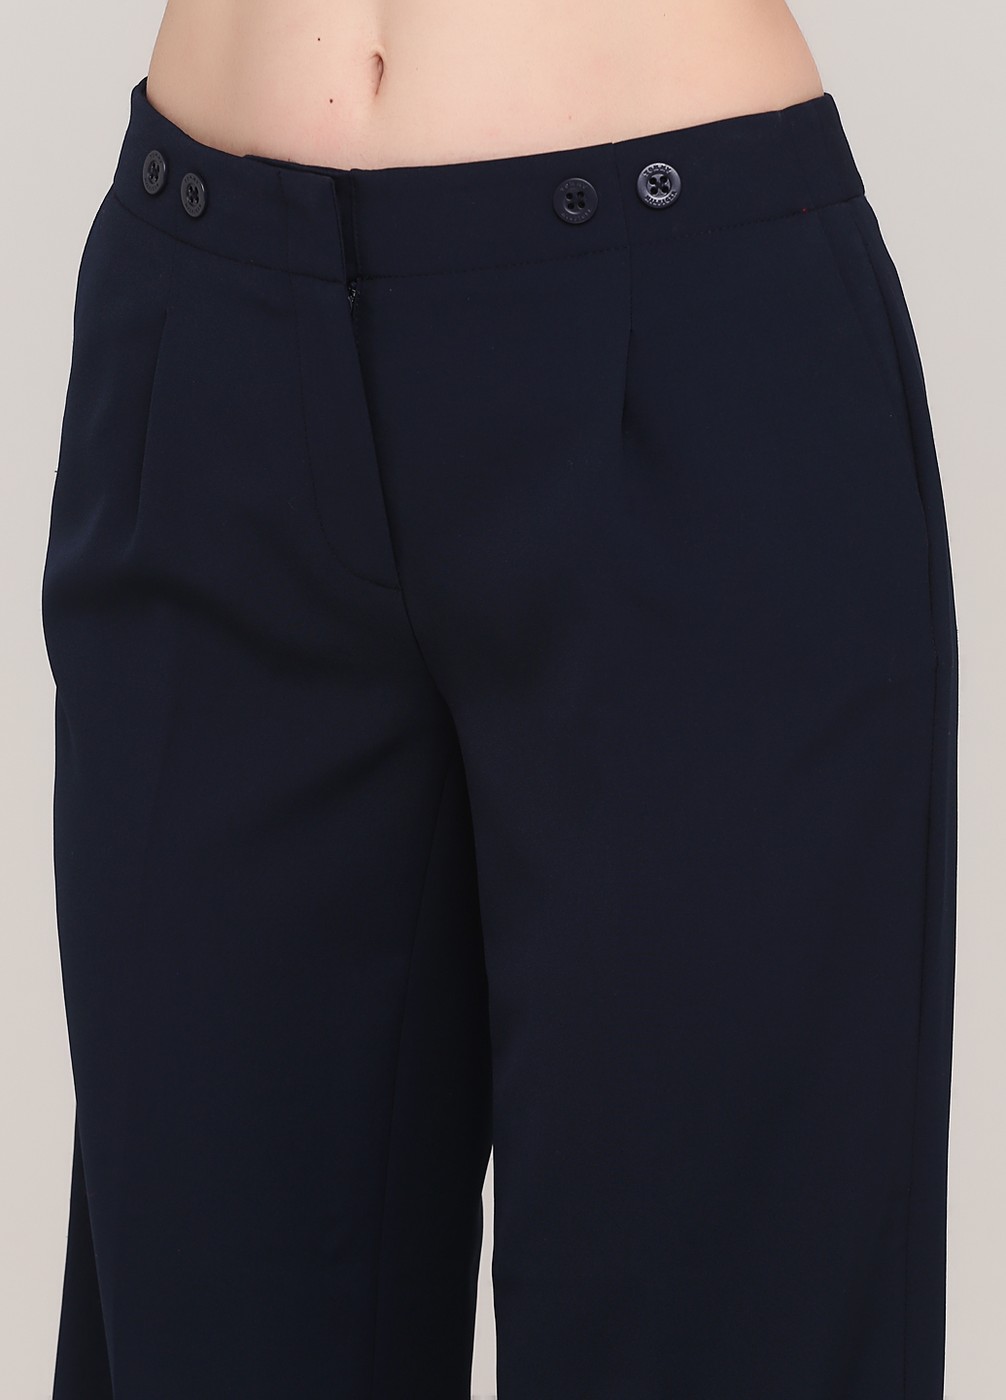 Брюки женские - брюки Crop Tommy Hilfiger, 2/S, 2/S